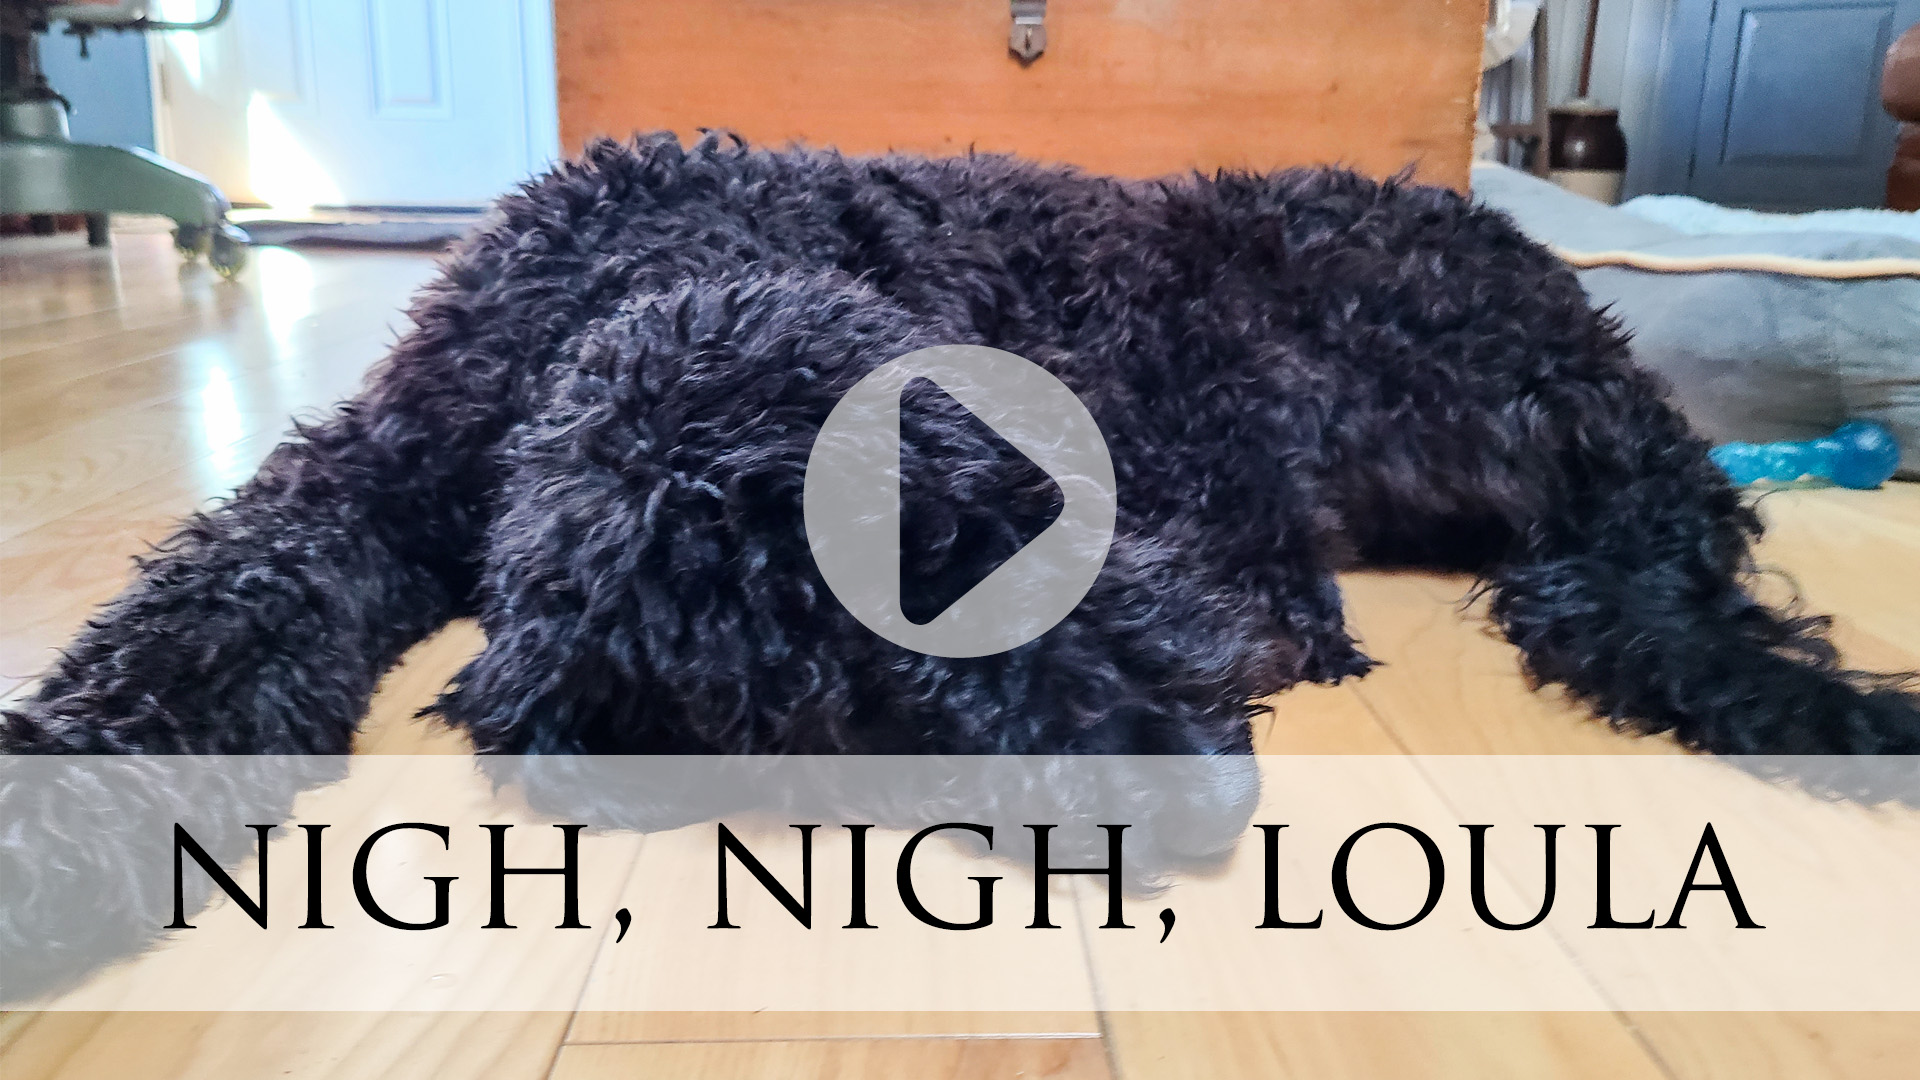 Snoring Goldendoodle Puppy, Loula | prodigalpieces.com #prodigalpieces